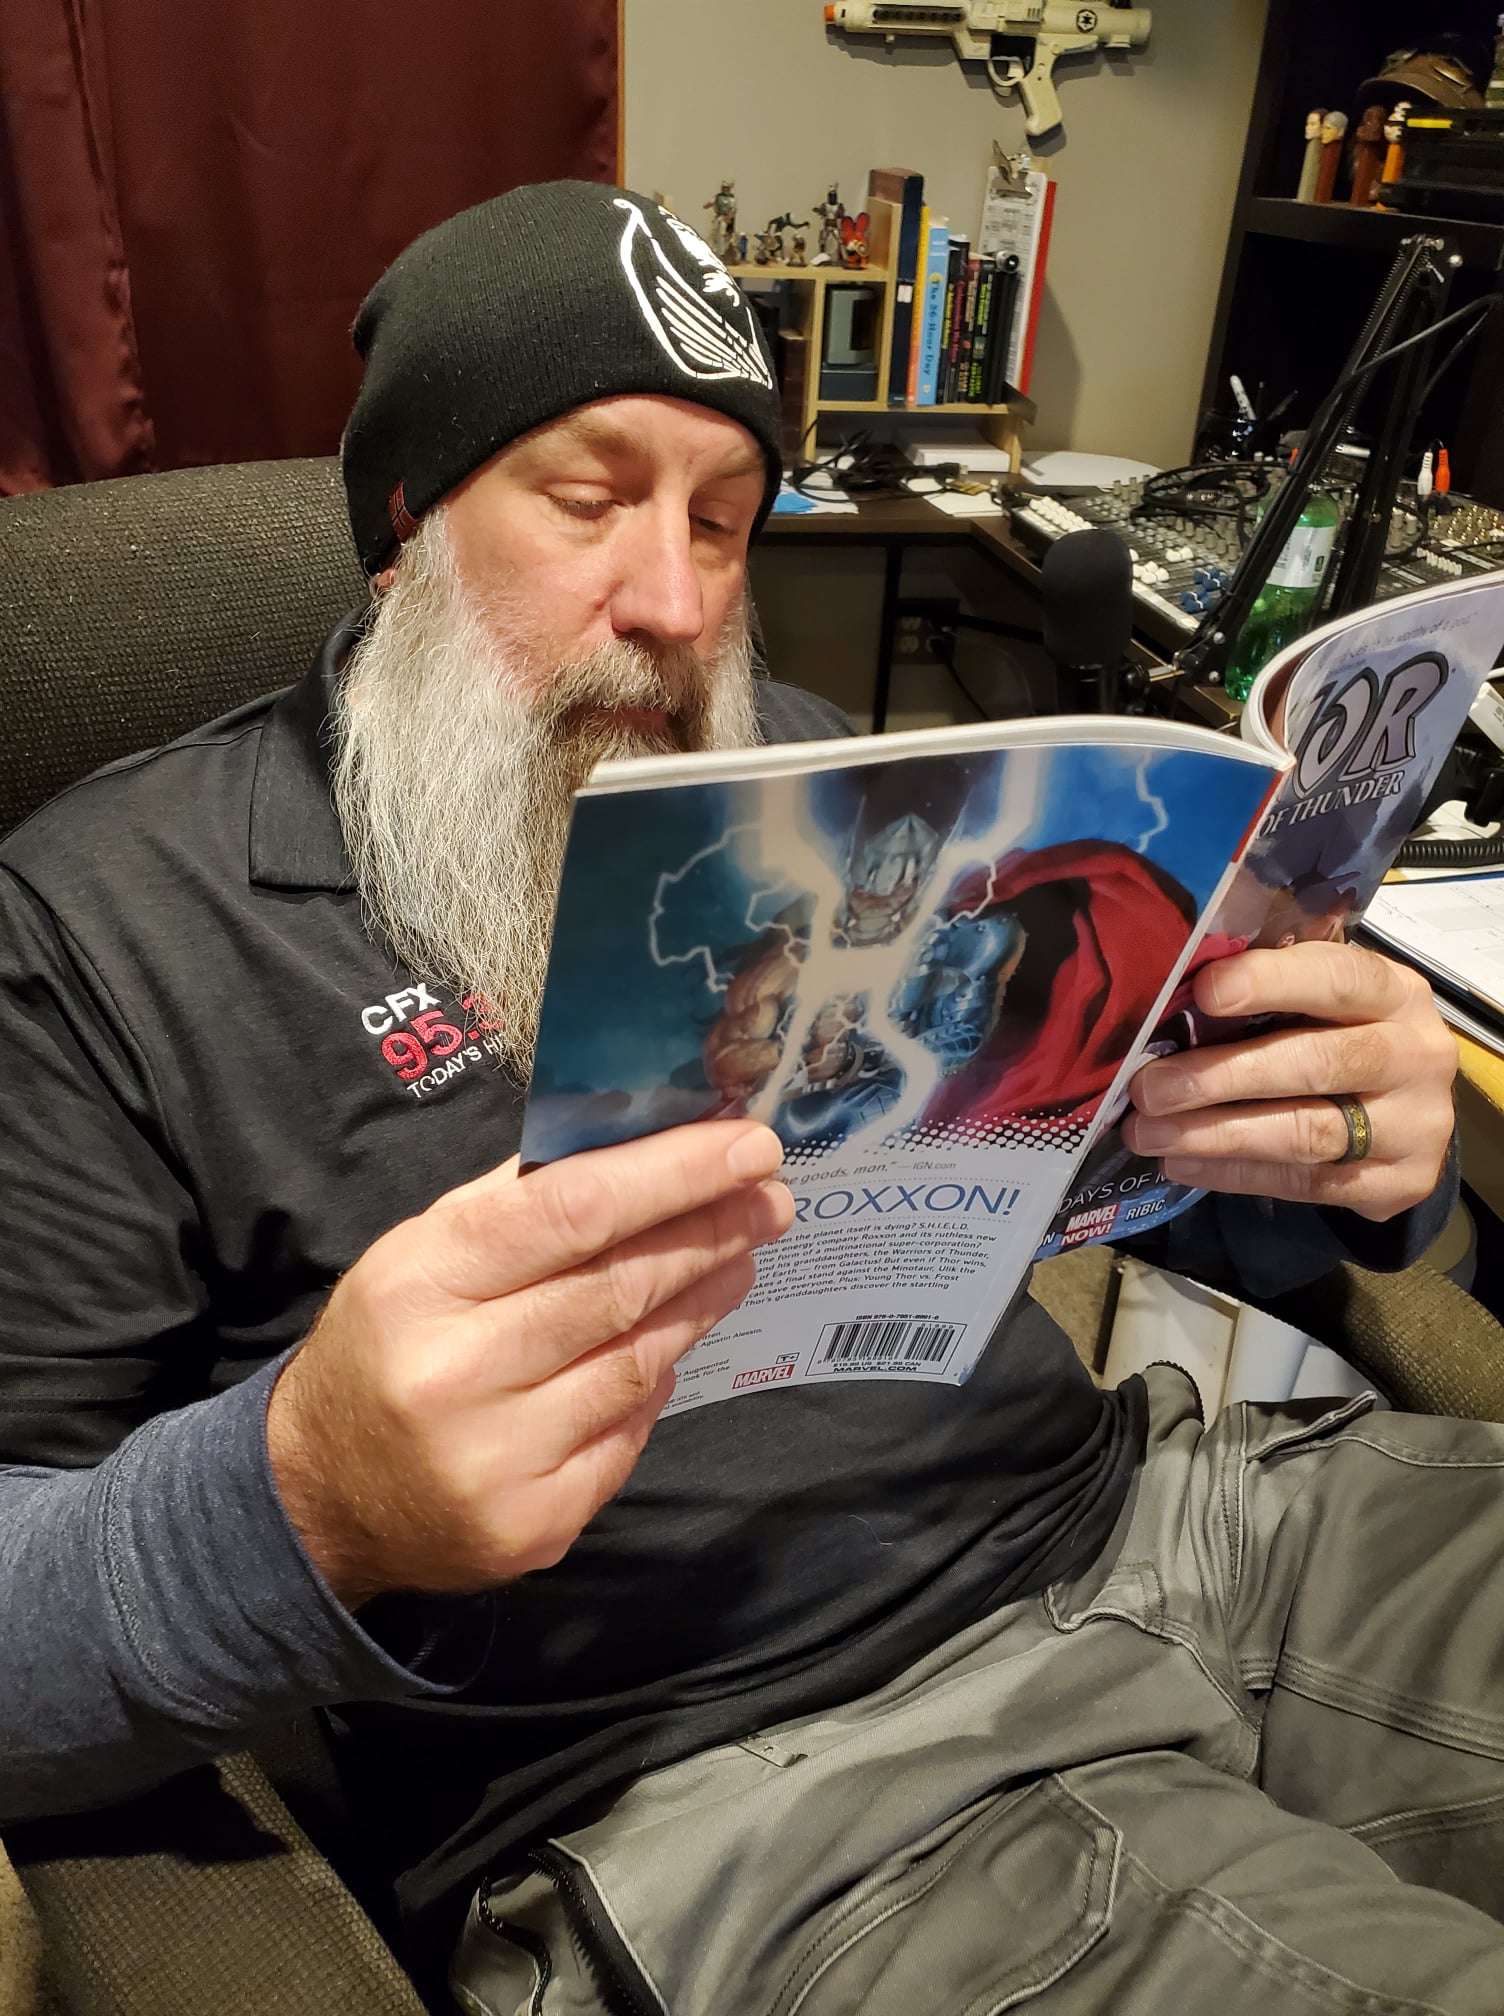 Rob Ryan reading a Thor comic book